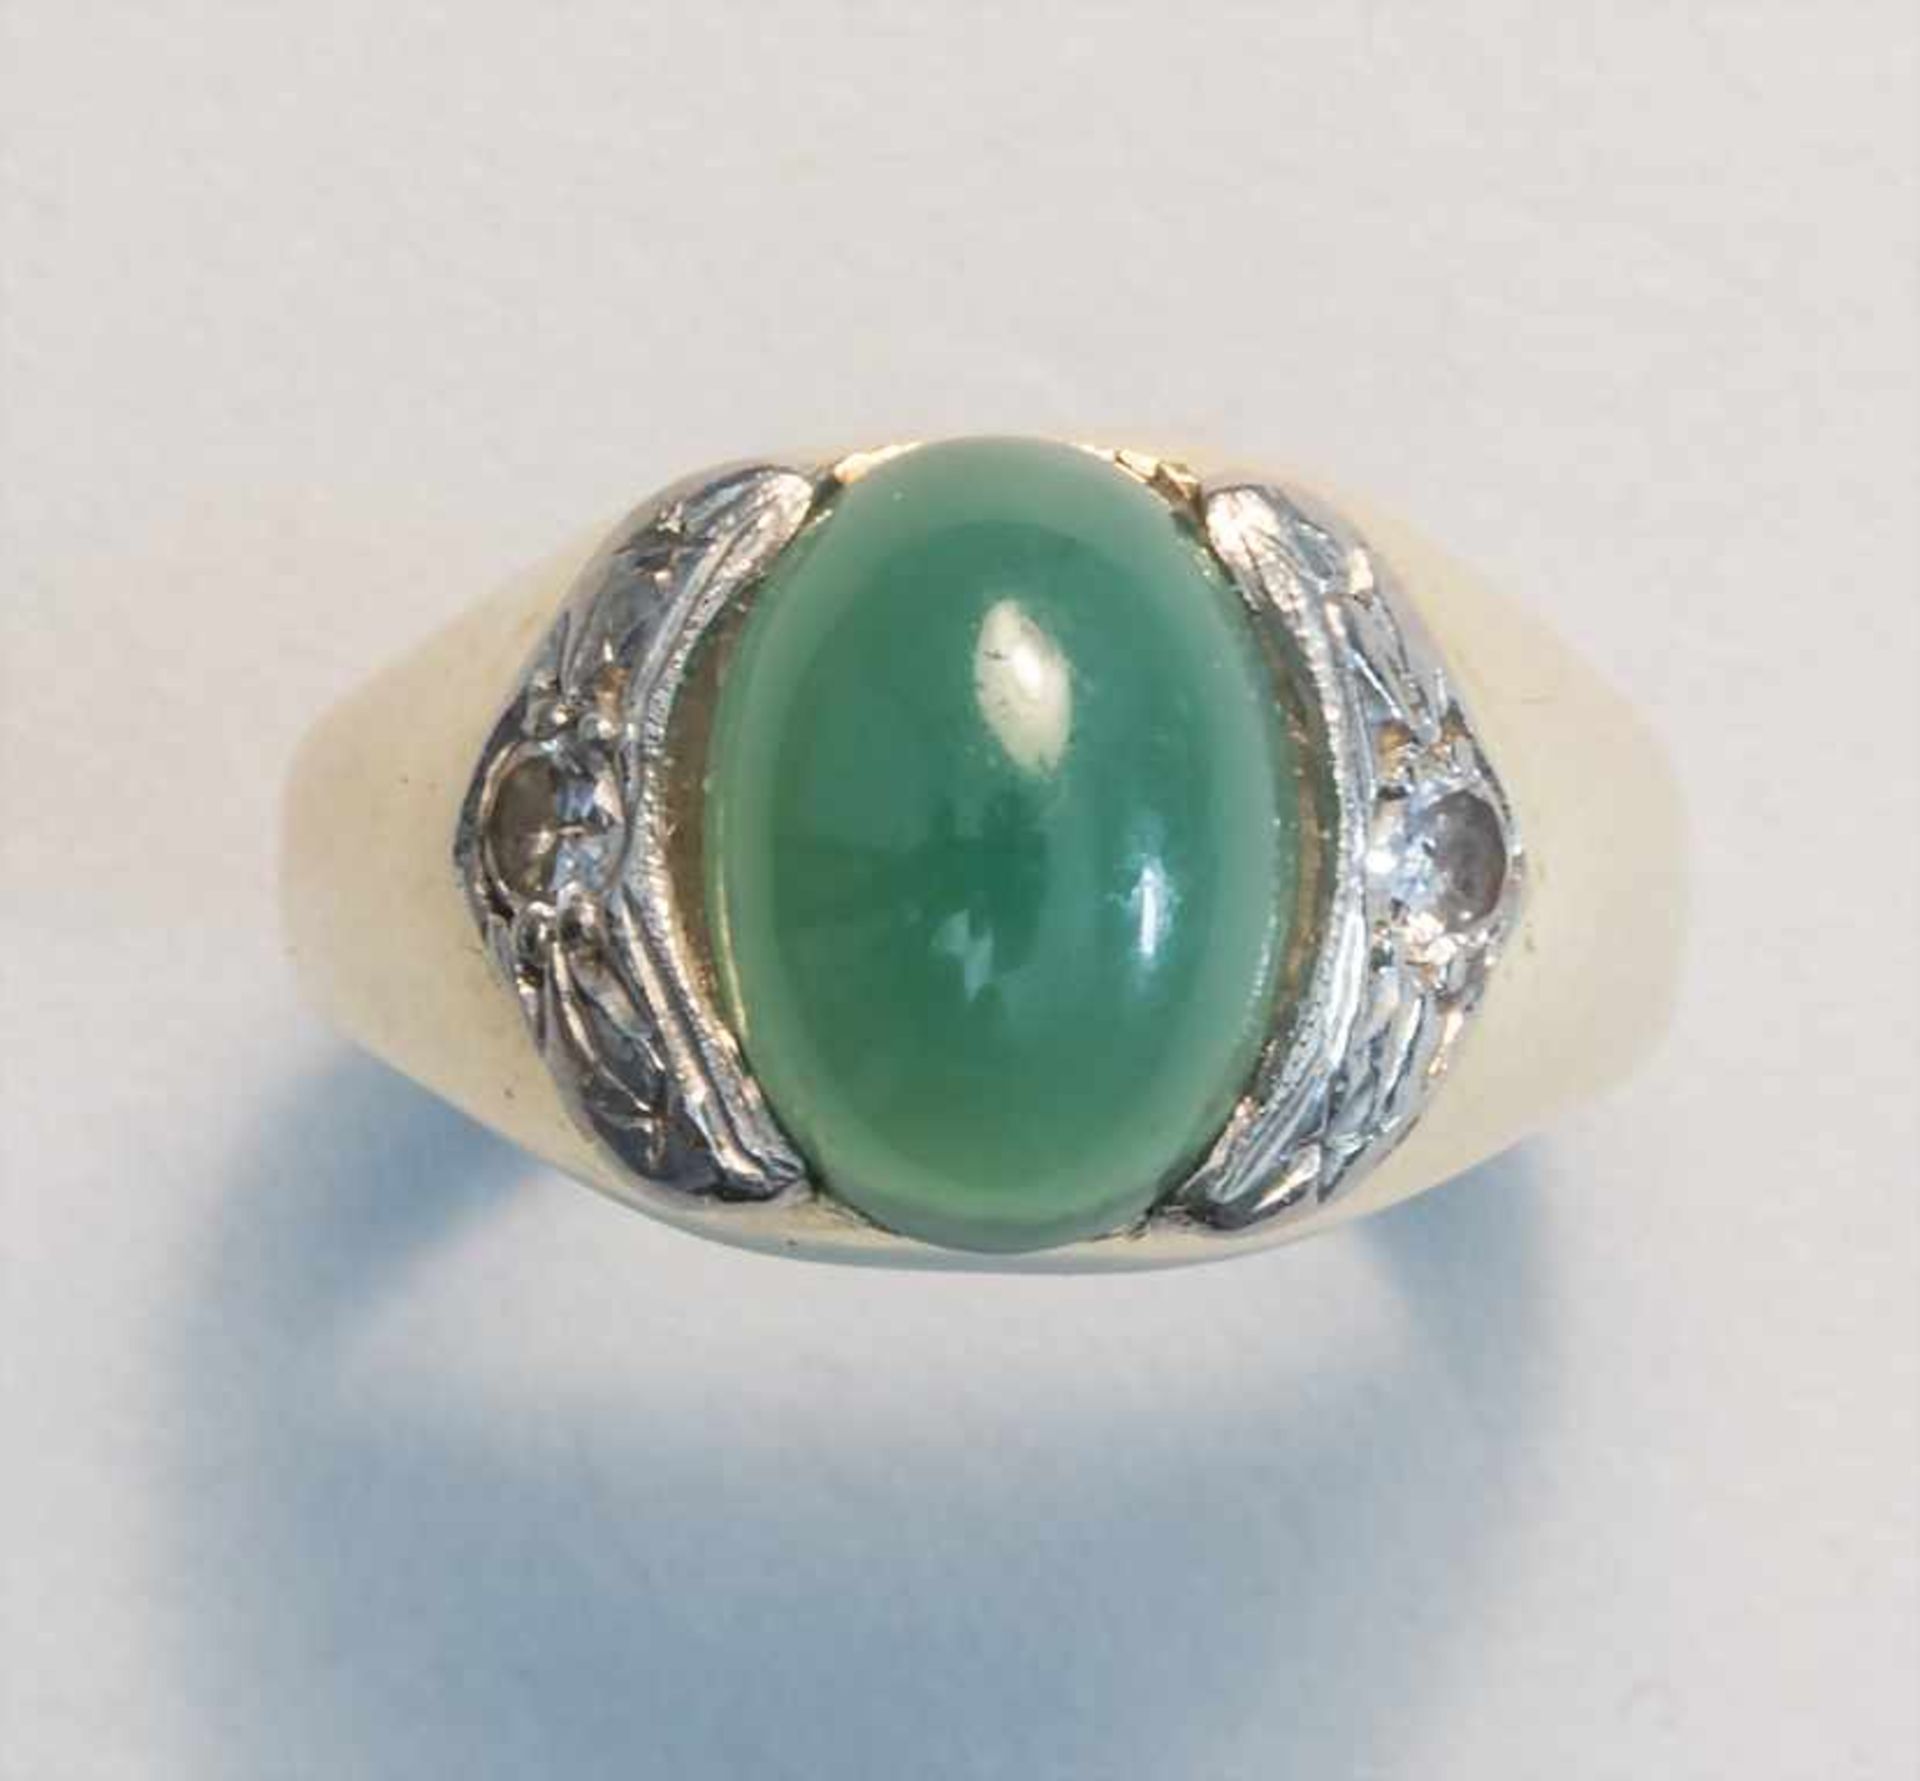 Damenring mit Diamant und Jade / A ladies ring with diamonds and jade - Image 2 of 4